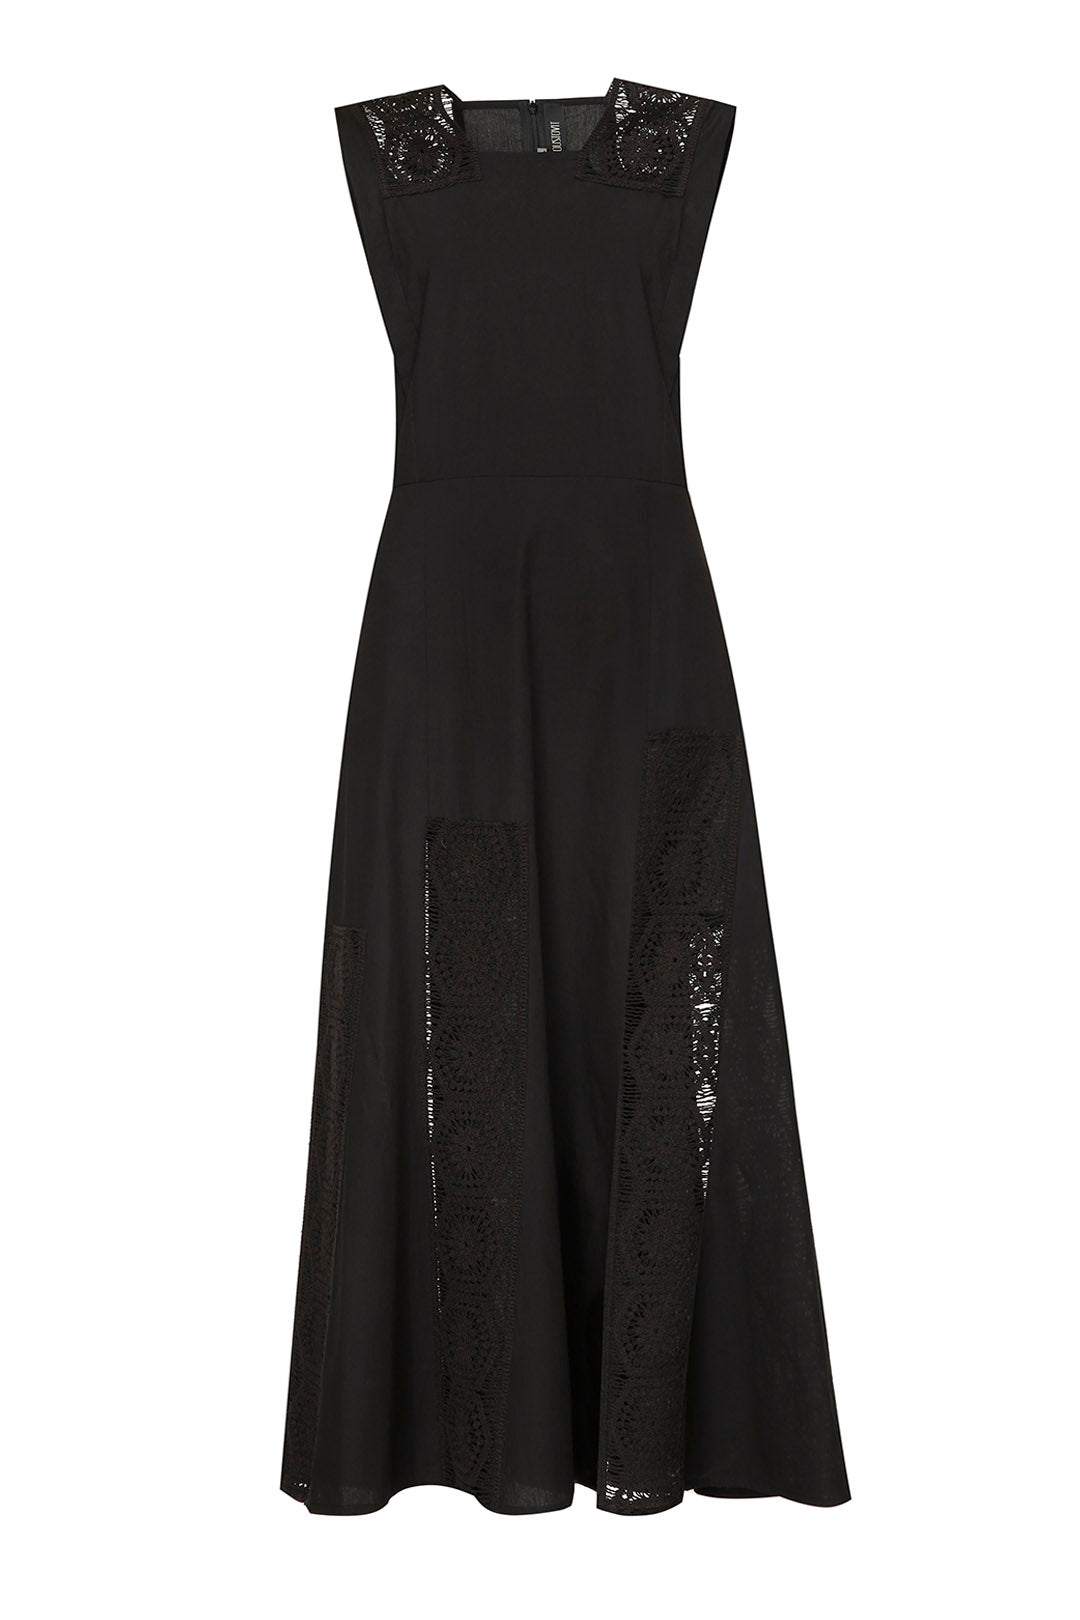 Black dress with lace details